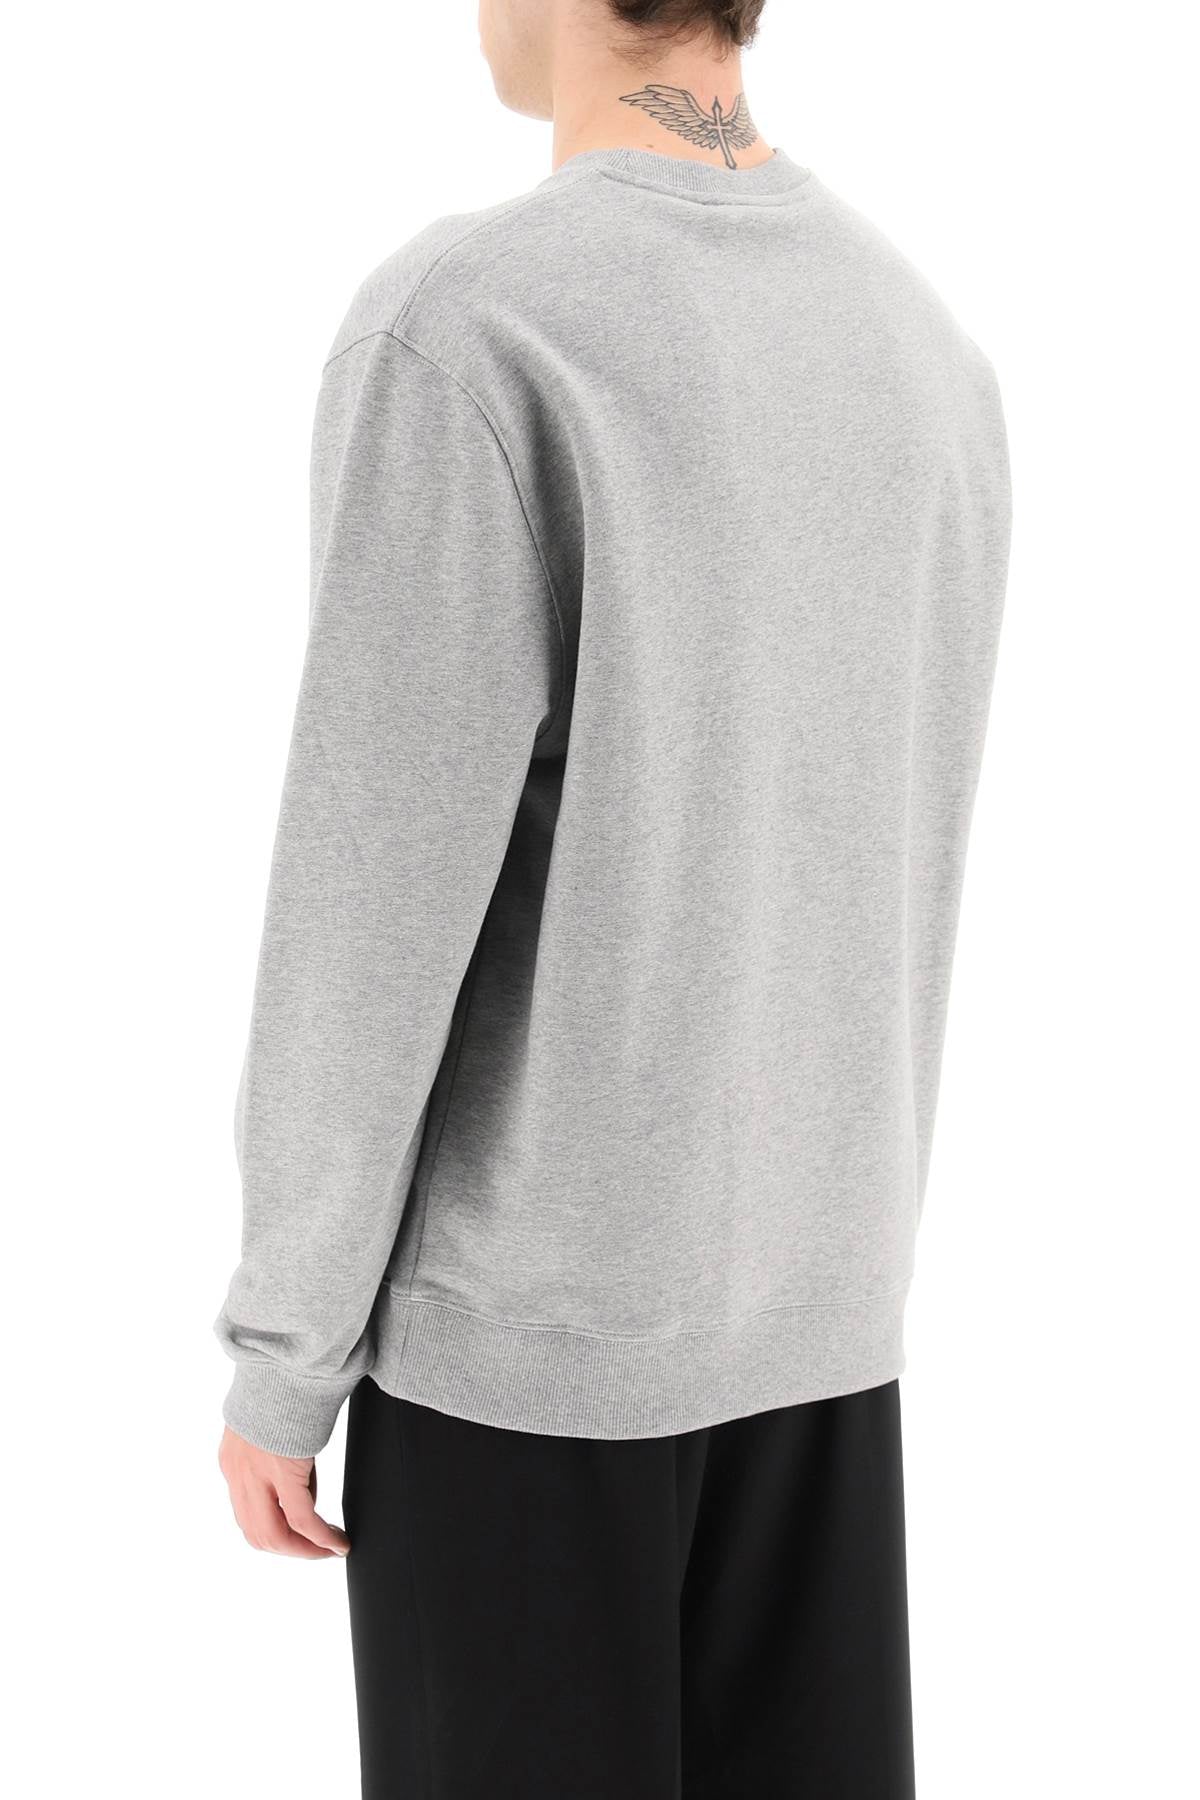 AXEL ARIGATO logo patch sweatshirt A1124004GRYME